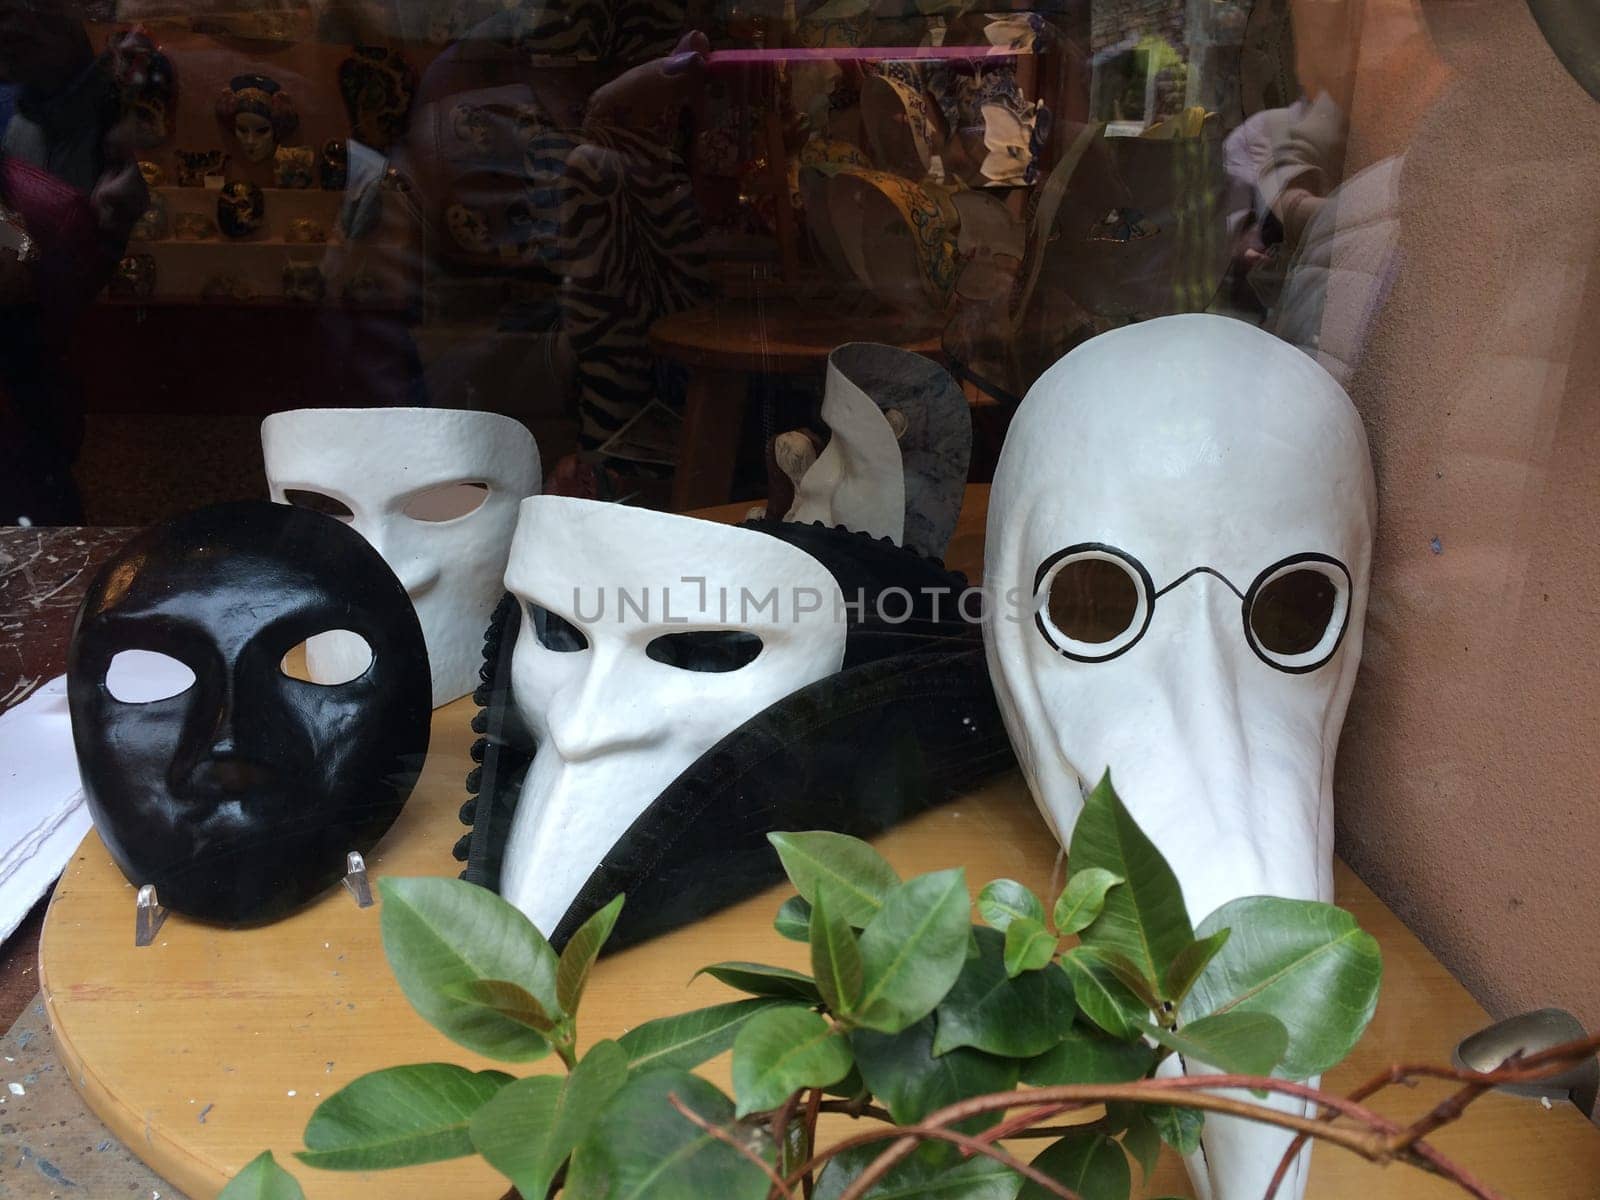 Venetian carnival masks in a shop window. High quality photo